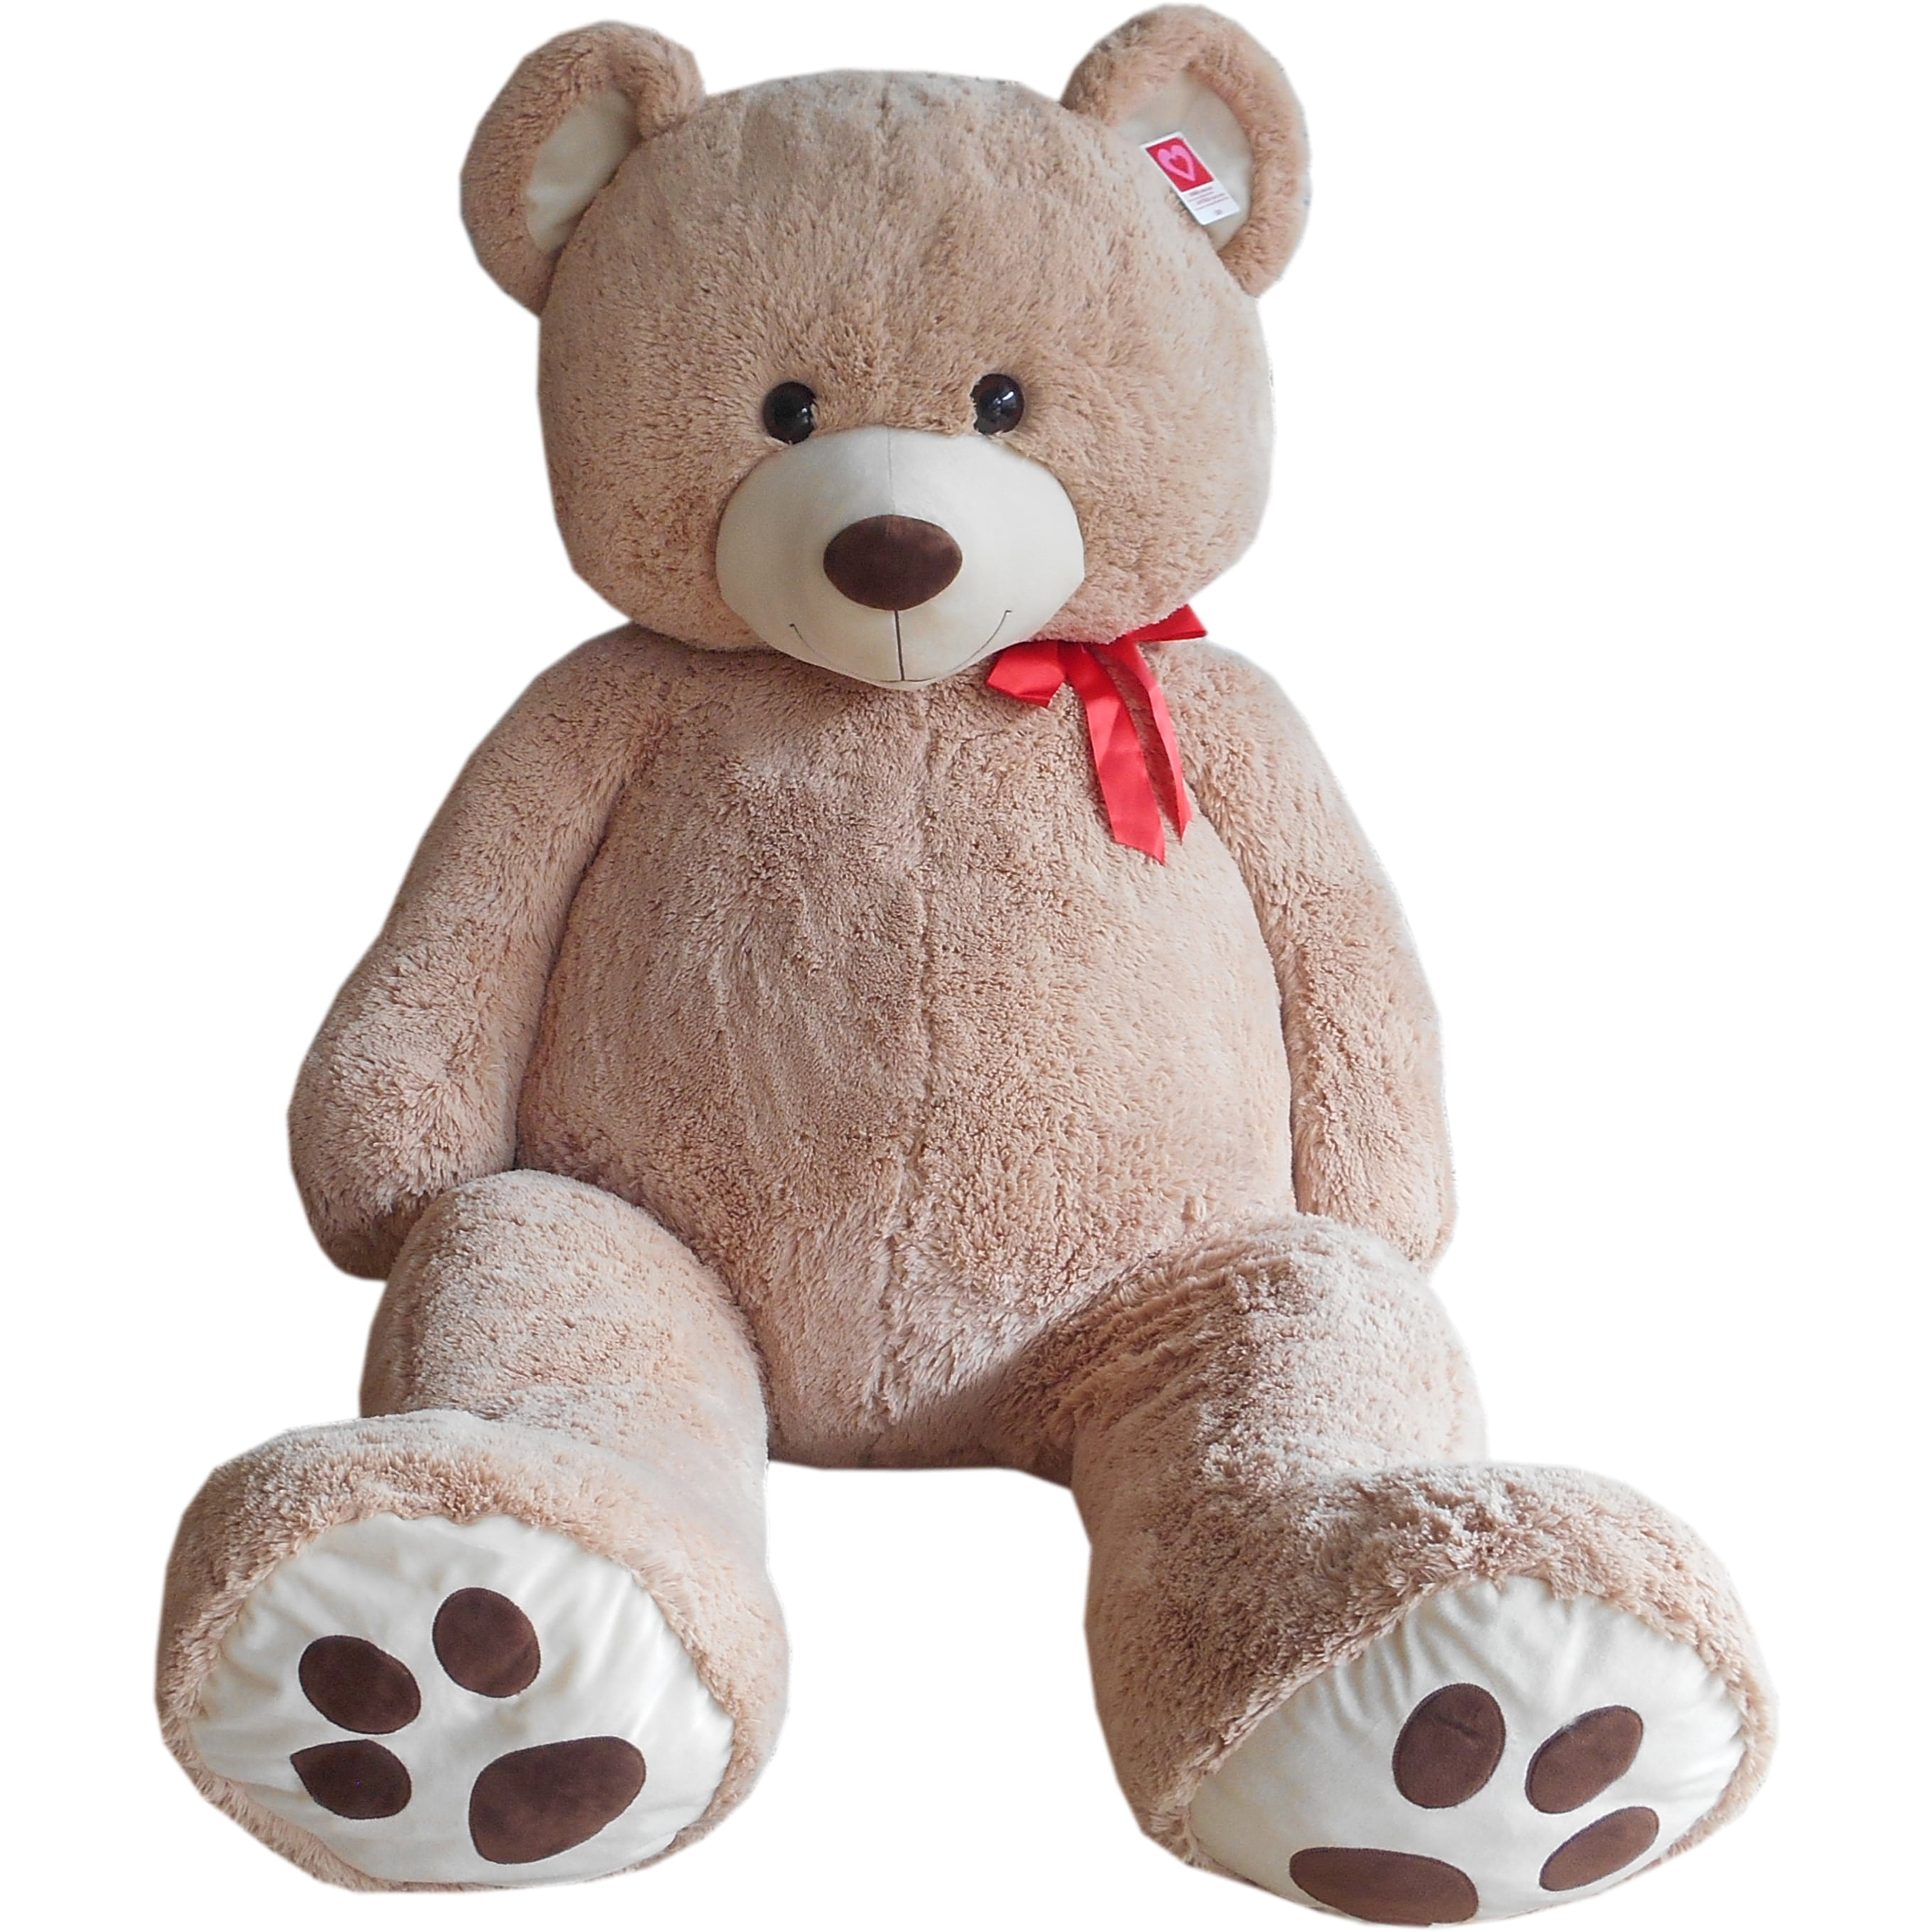 walmart big teddy bears for valentines day